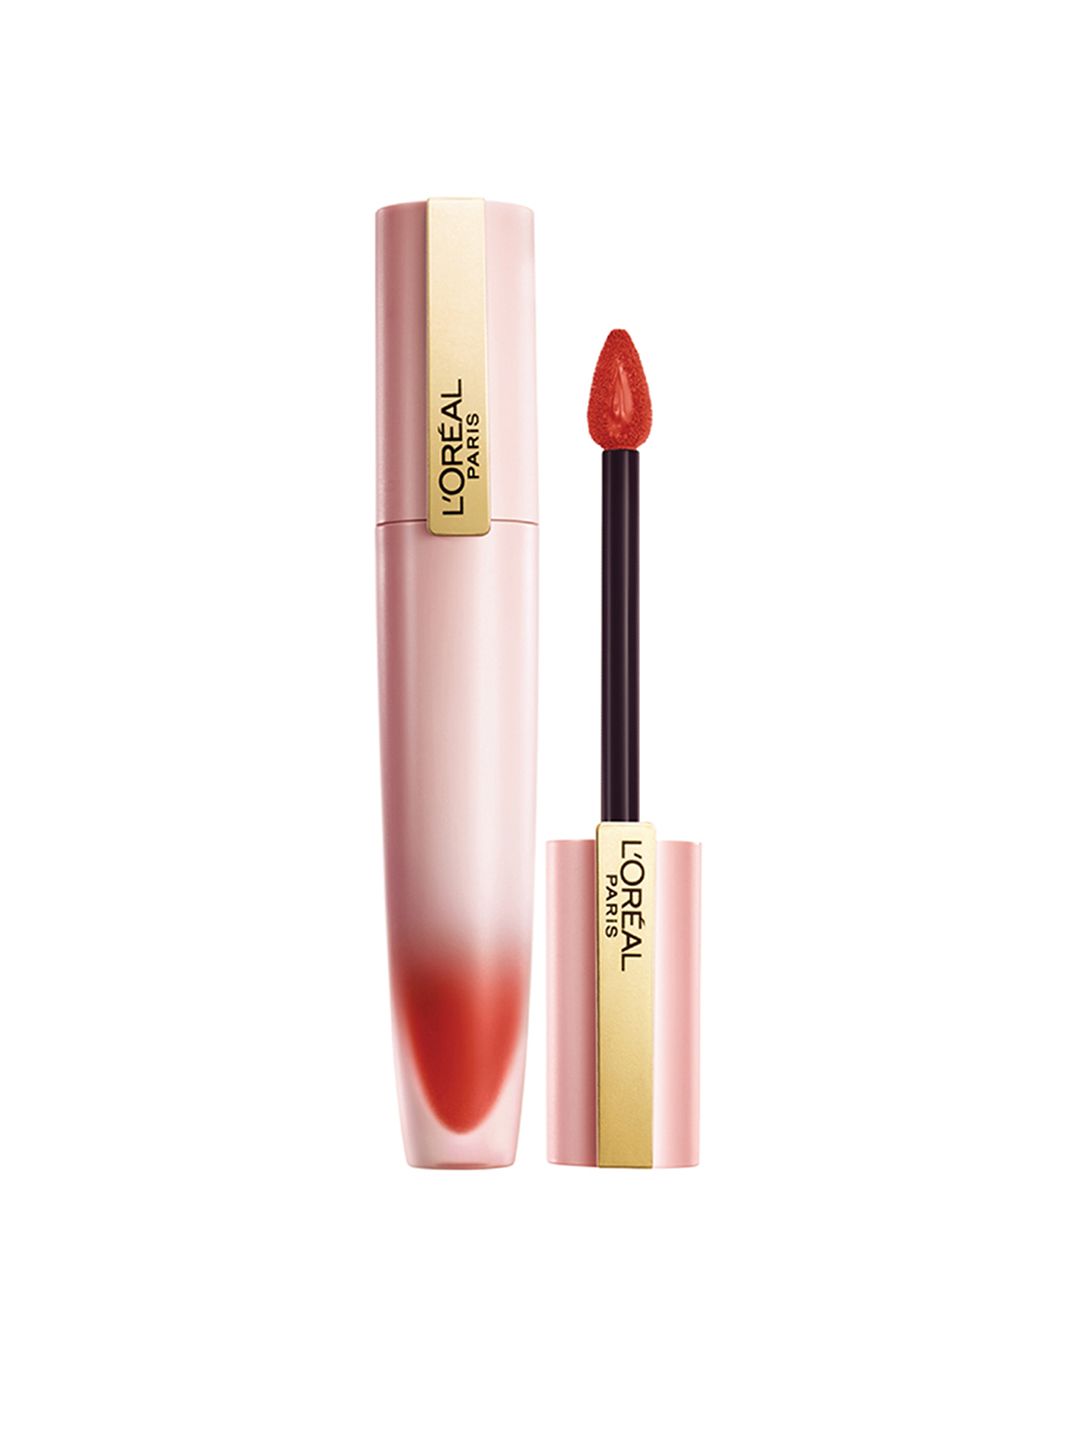 LOreal Paris Chiffon Signature Liquid Lipstick 7ml - Reach Out 221 Price in India